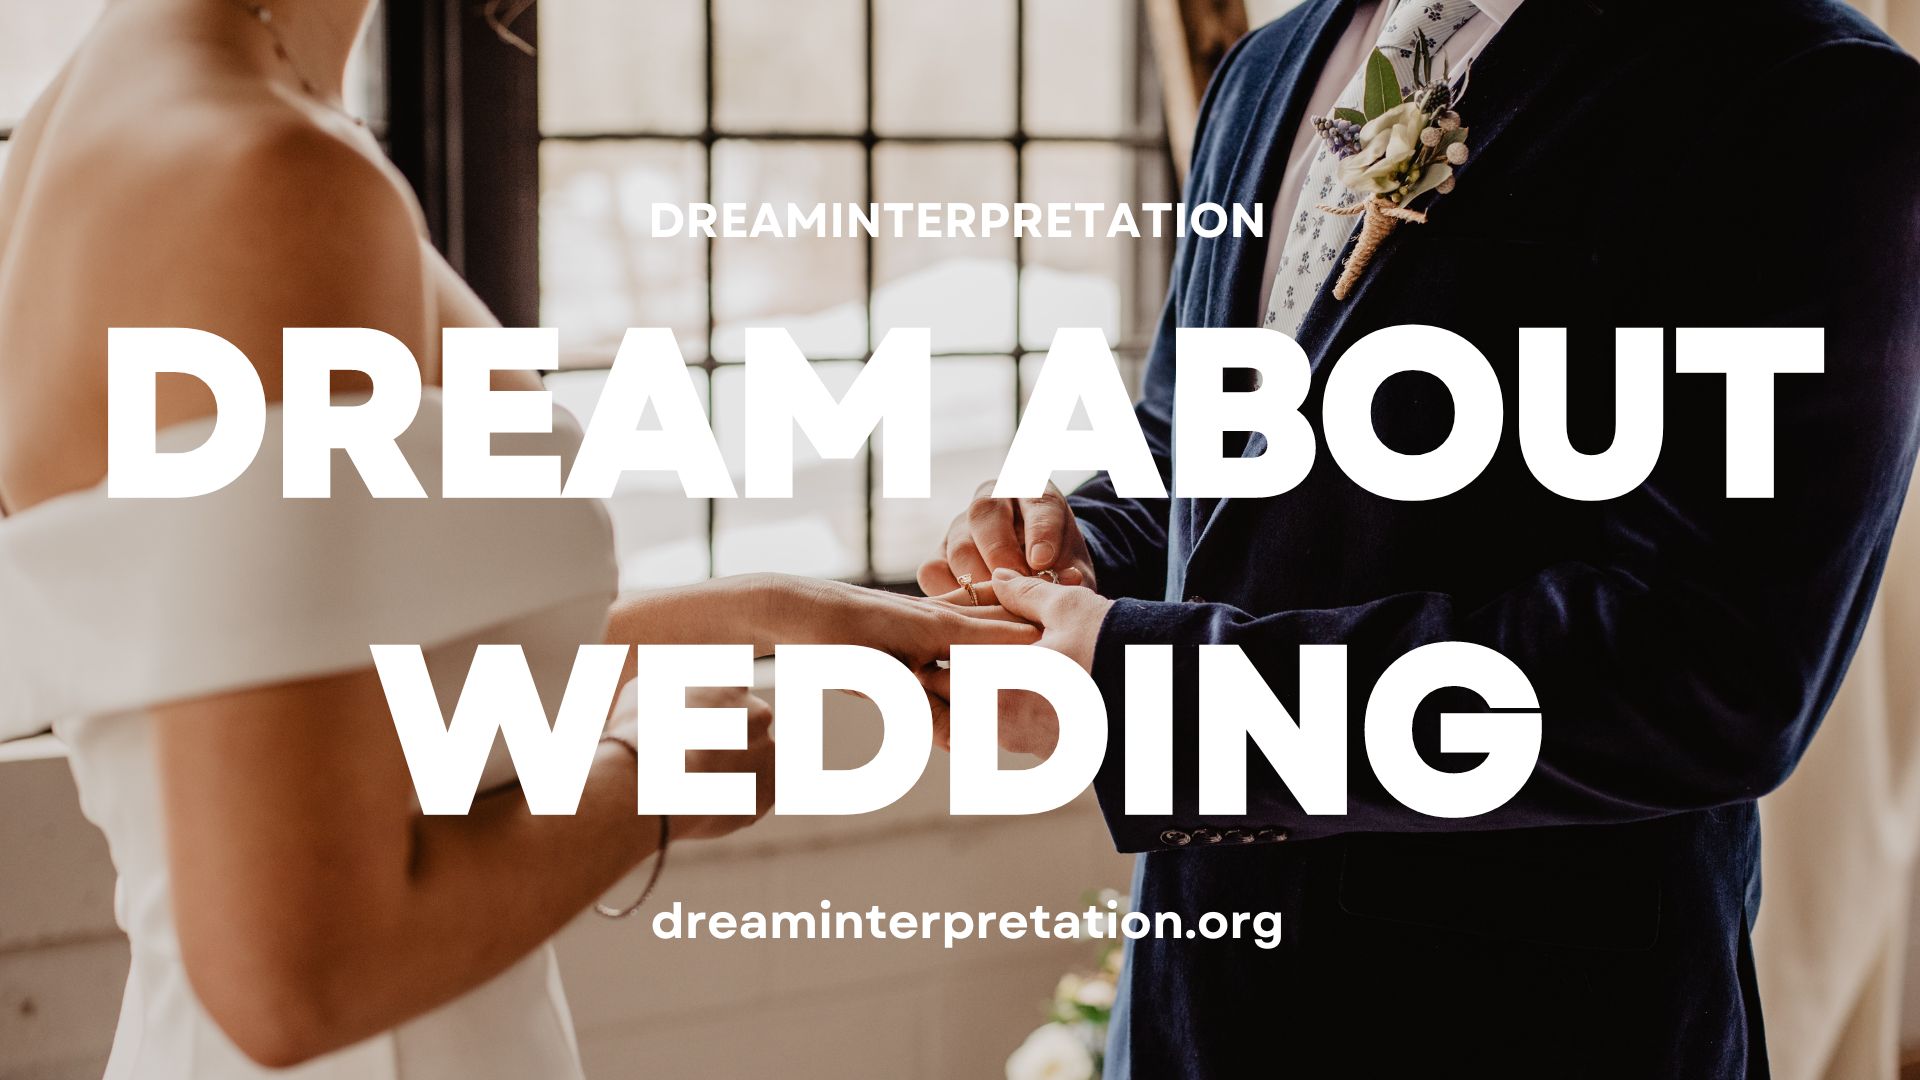 Dream About Wedding